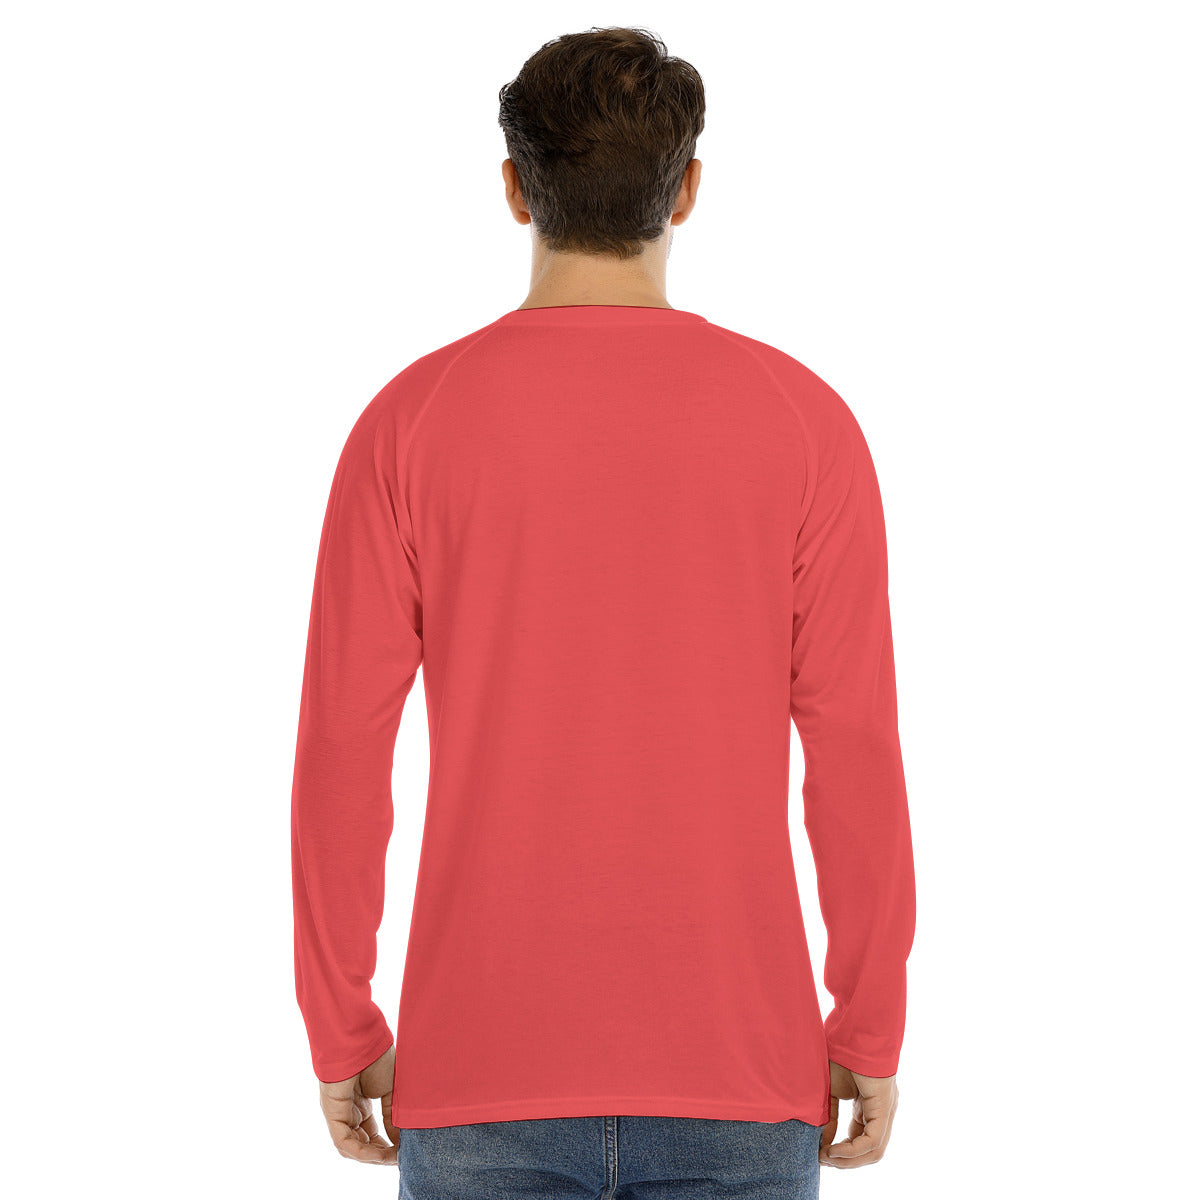 Rave 107 -- Men's Long Sleeve T-shirt With Raglan Sleeve